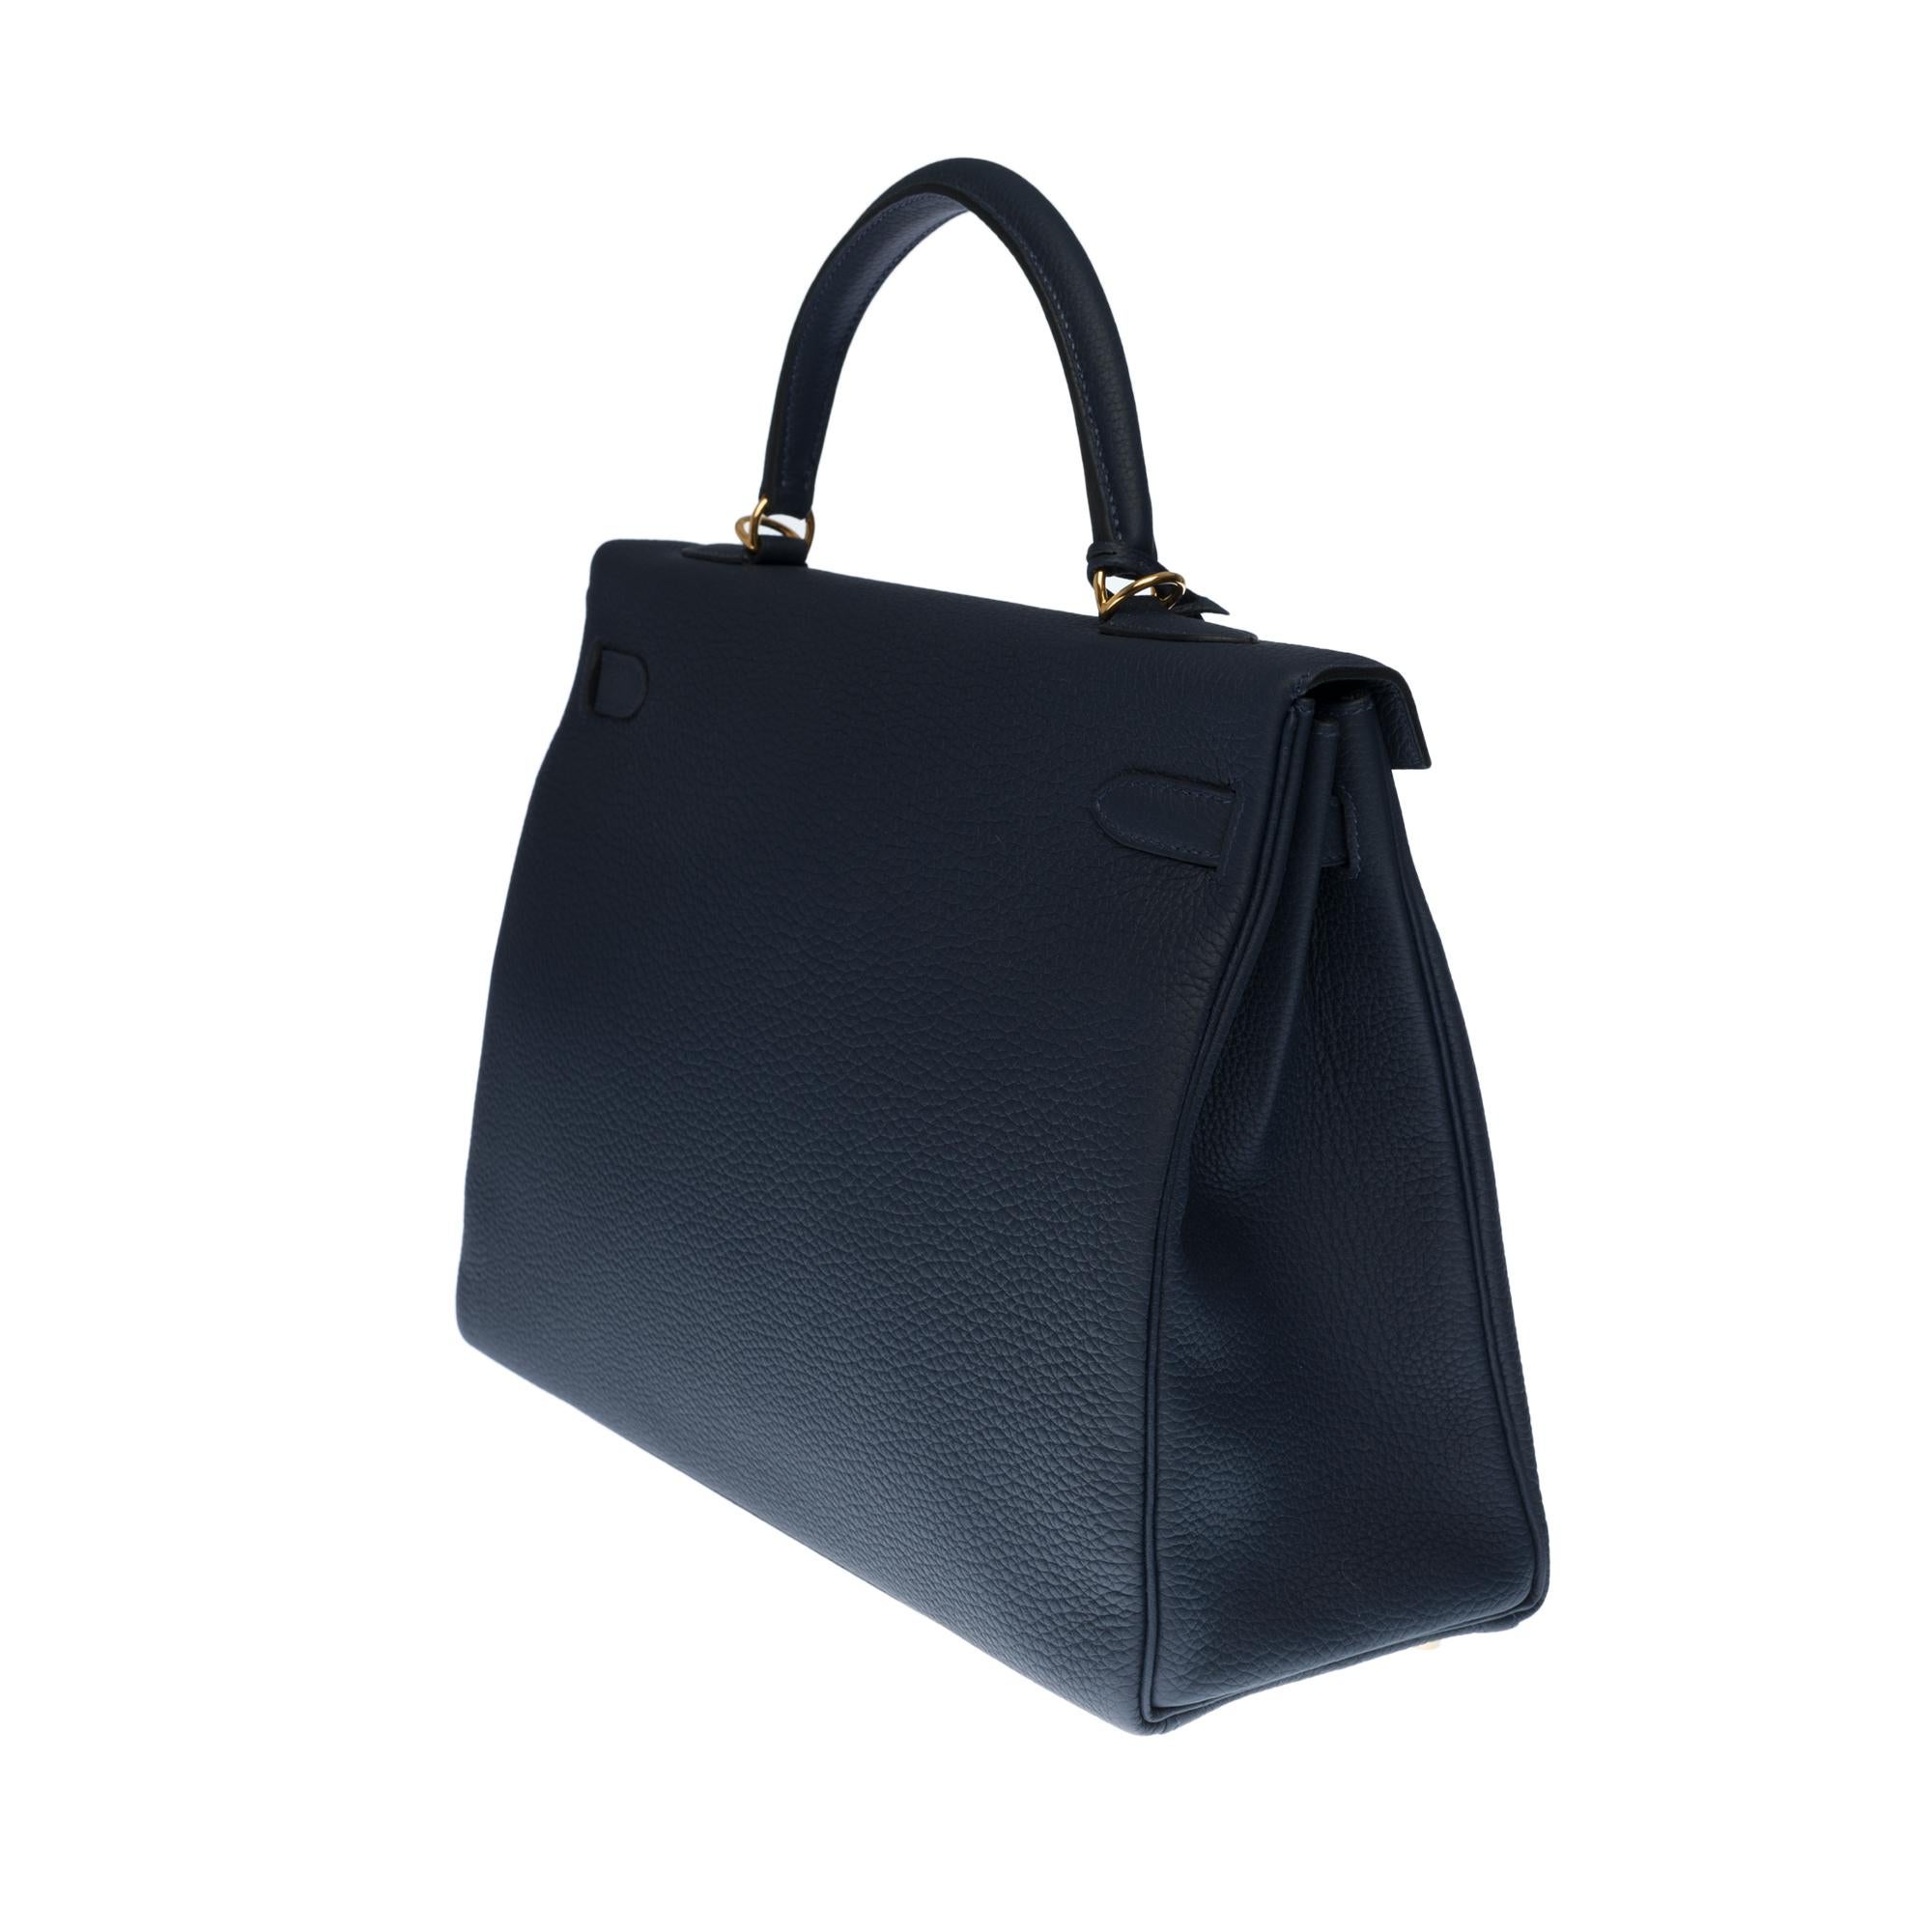 Women's NEW- Hermès Kelly 32cm handbag with strap in bleu nuit togo leather, GHW